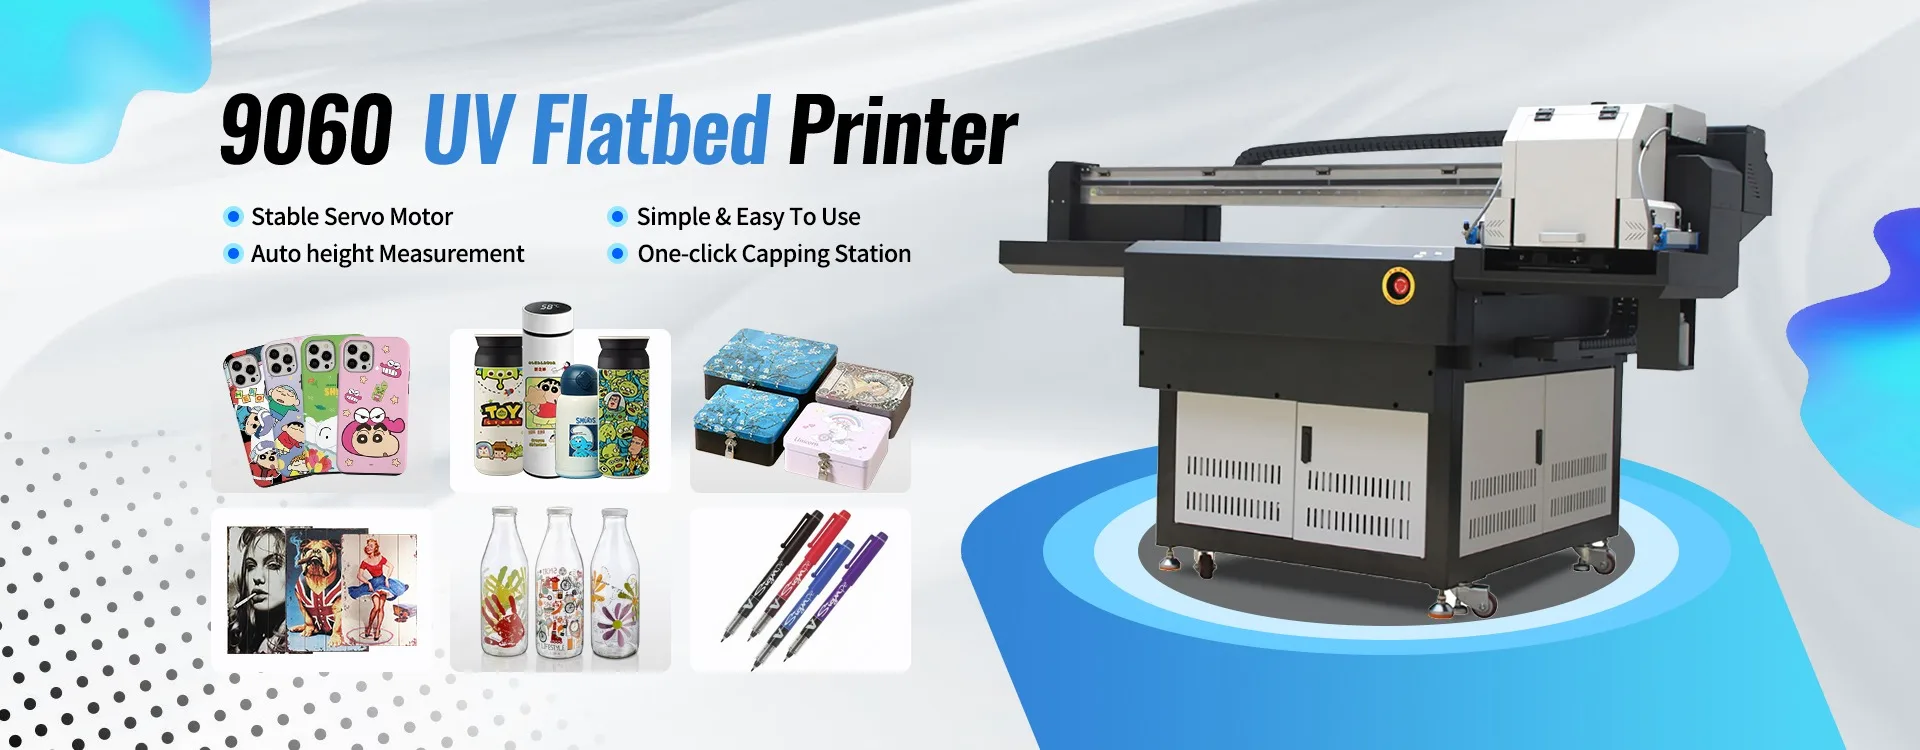 9060 UV Flatbed Printer